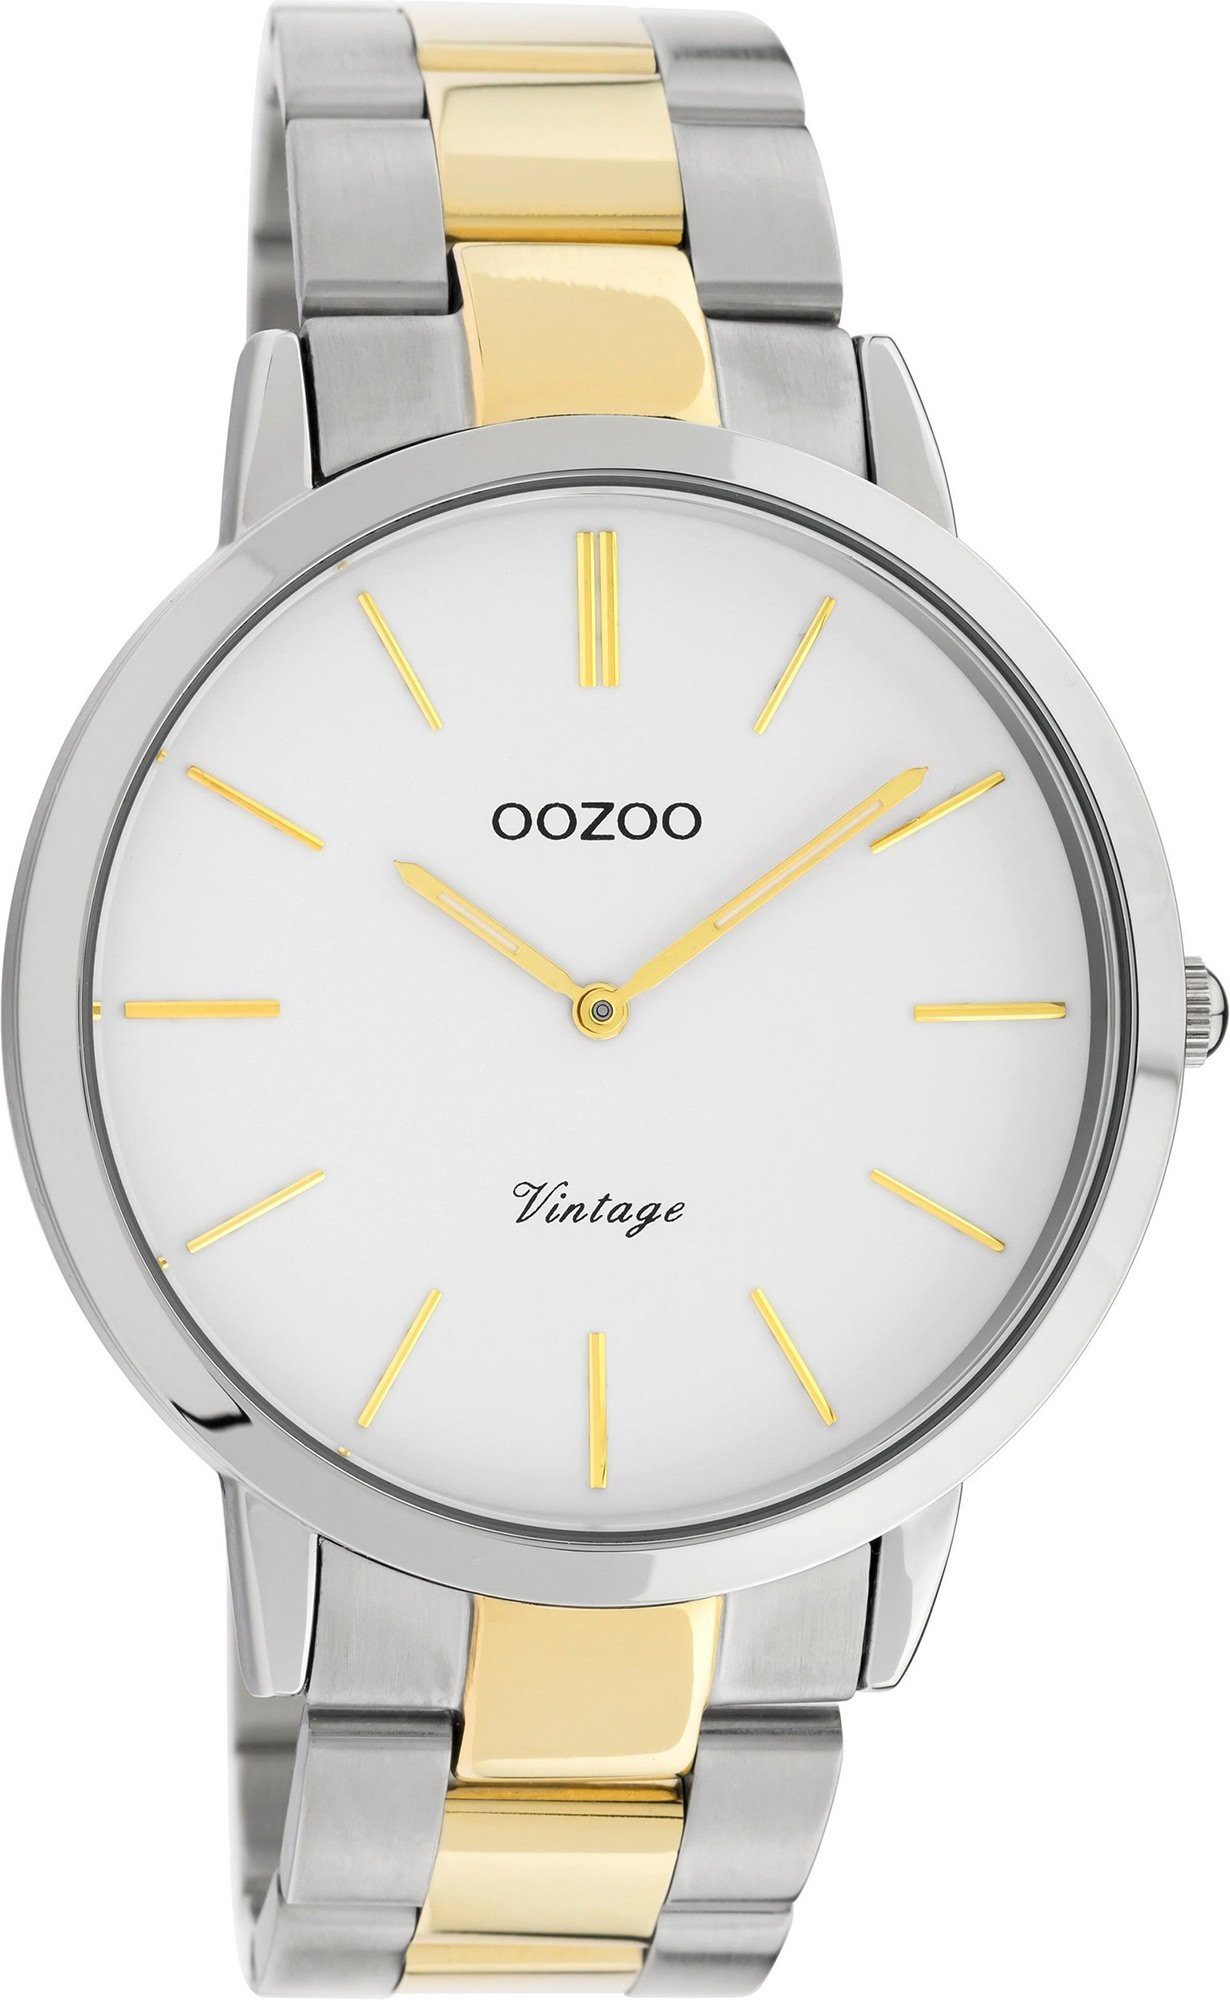 Damen, gold 42mm) Armbanduhr OOZOO rund, groß (ca. Herrenuhr Quarz, Unisex Quarzuhr Oozoo Fashion-Style Edelstahlarmband, silber